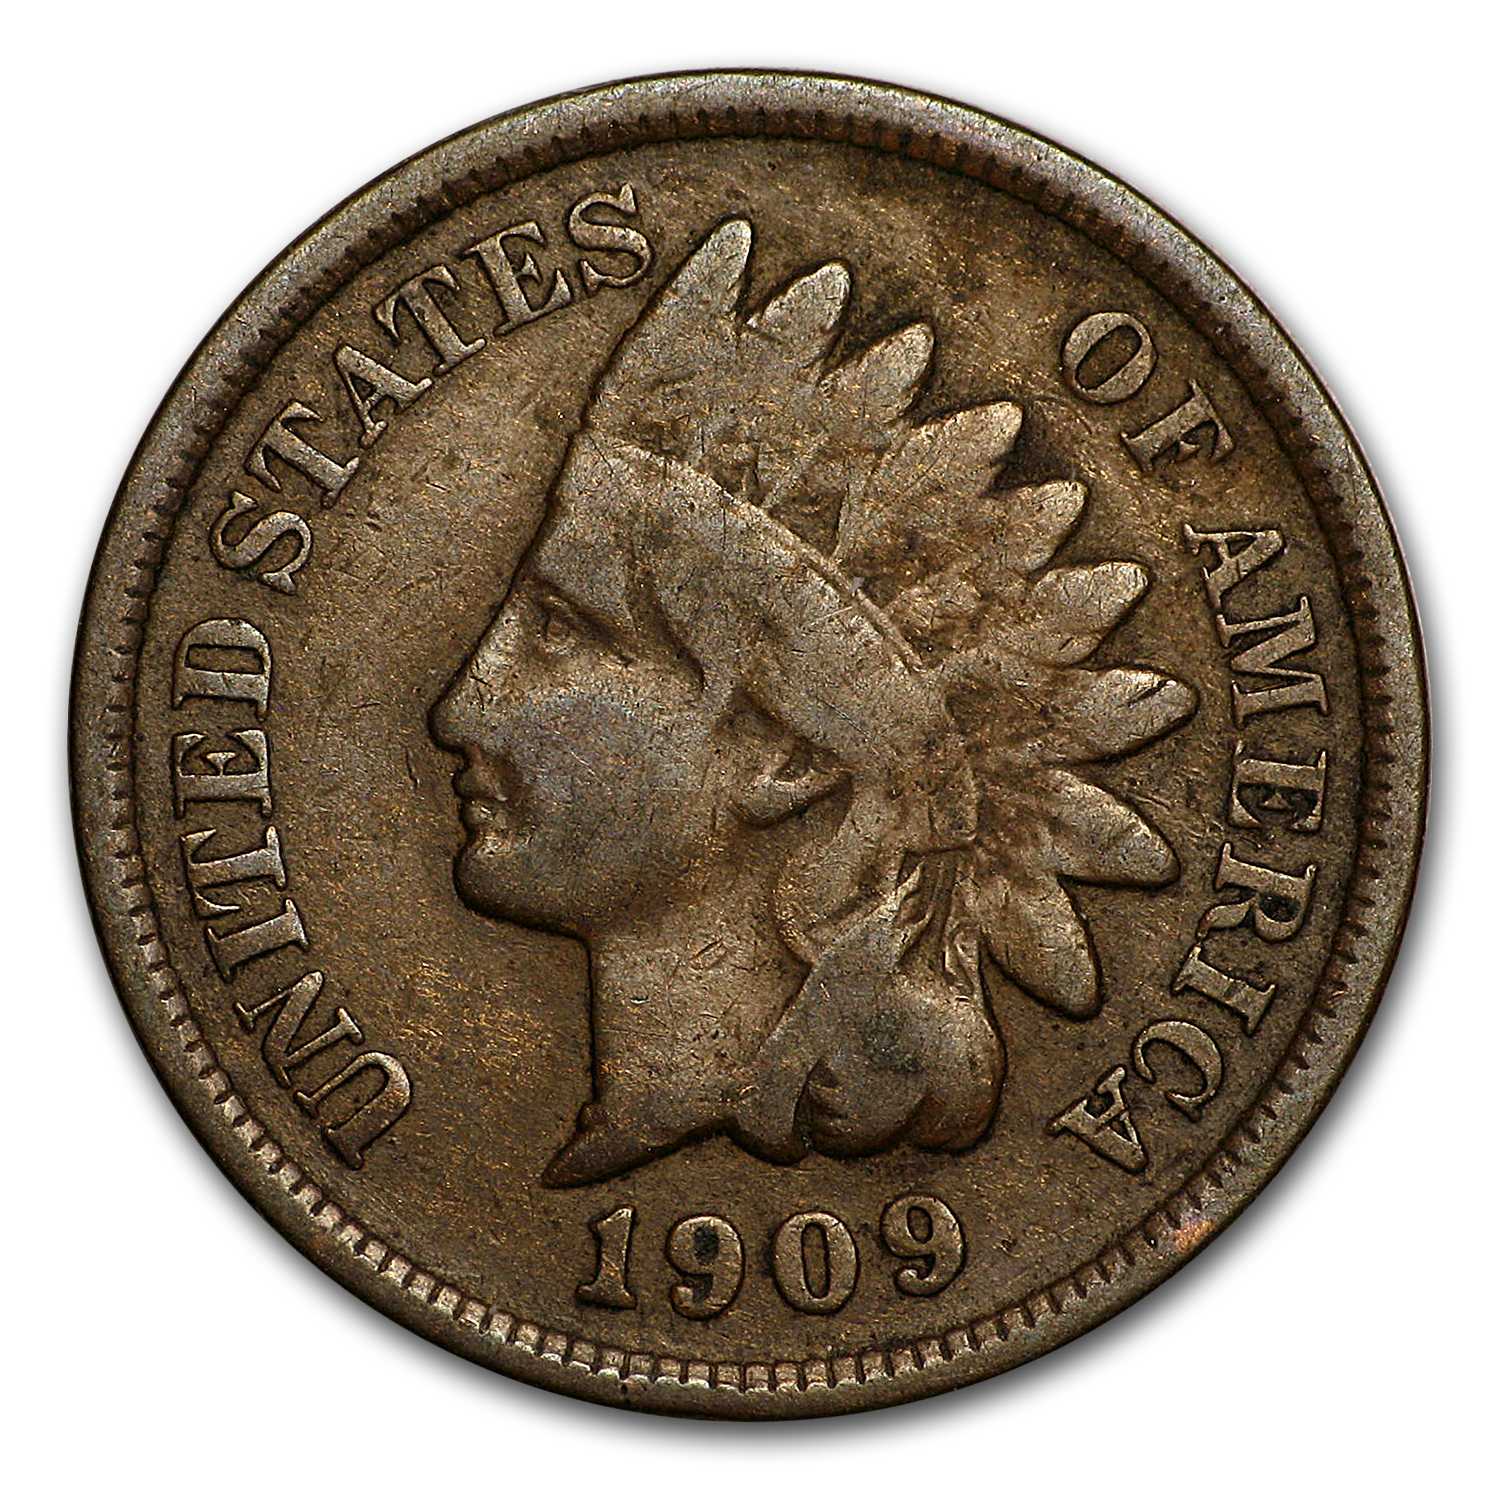 Buy 1909 Indian Head Cent Good/VG